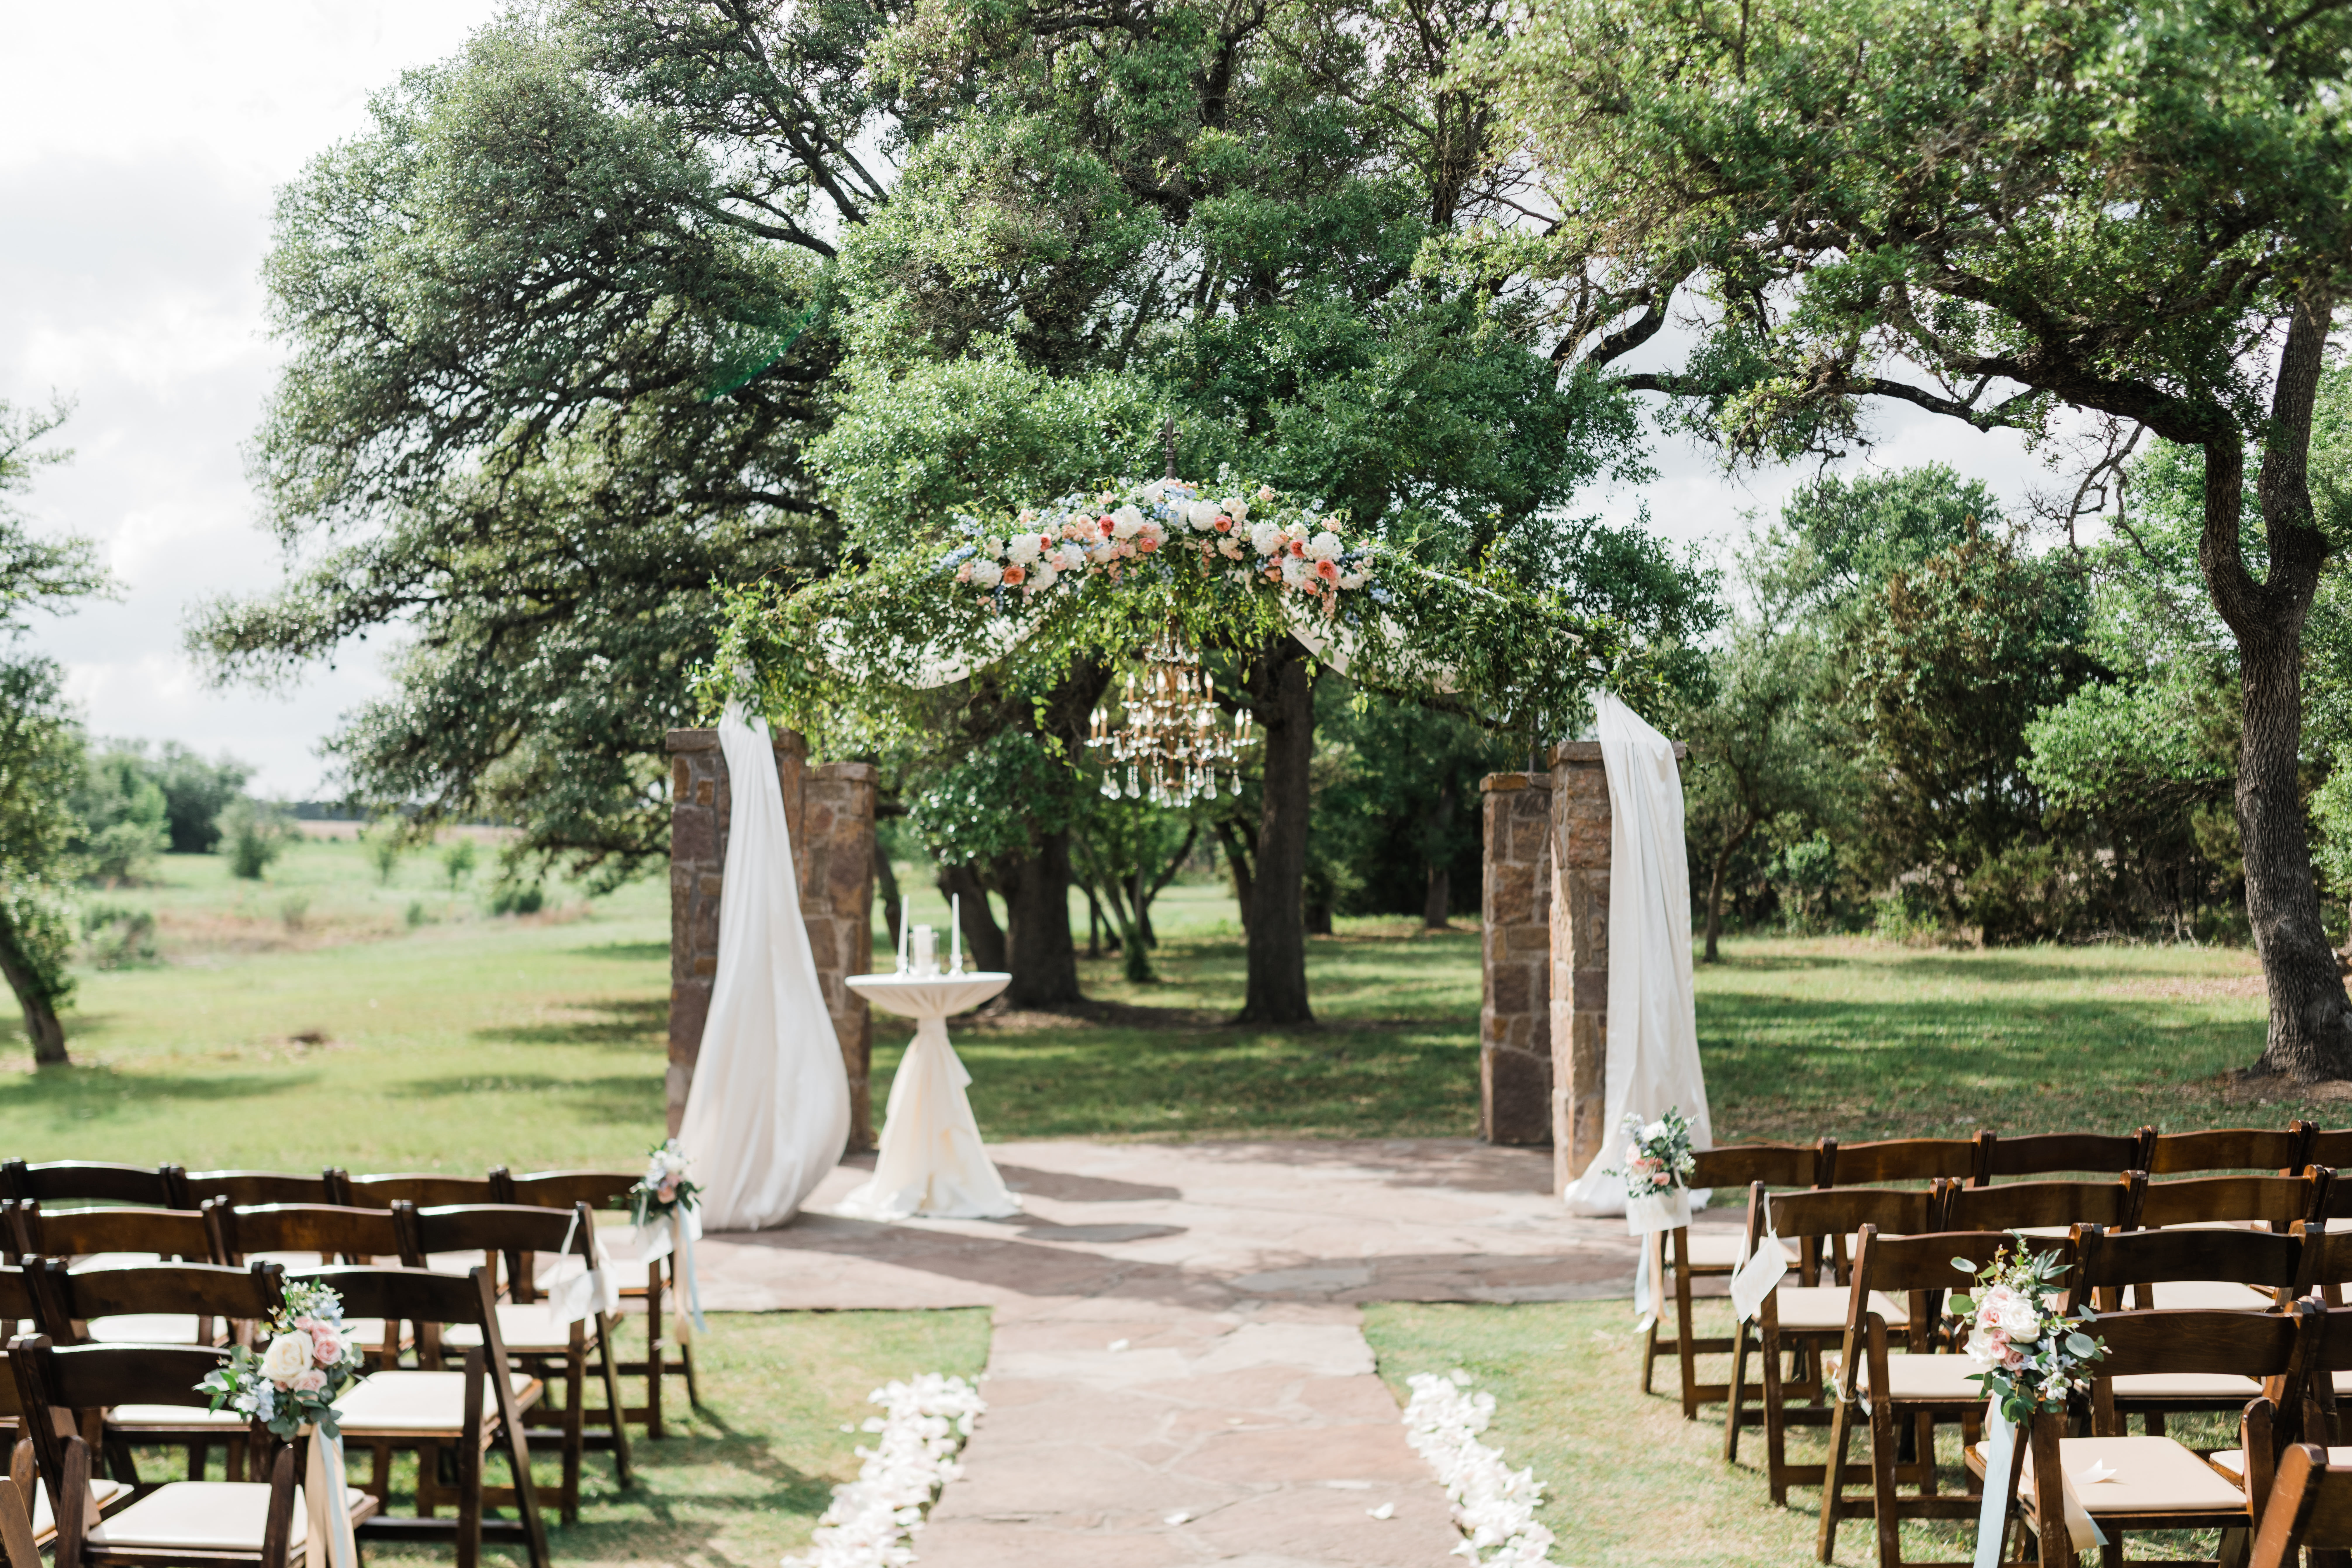 Ceremony details when choosing your Texas wedding venue